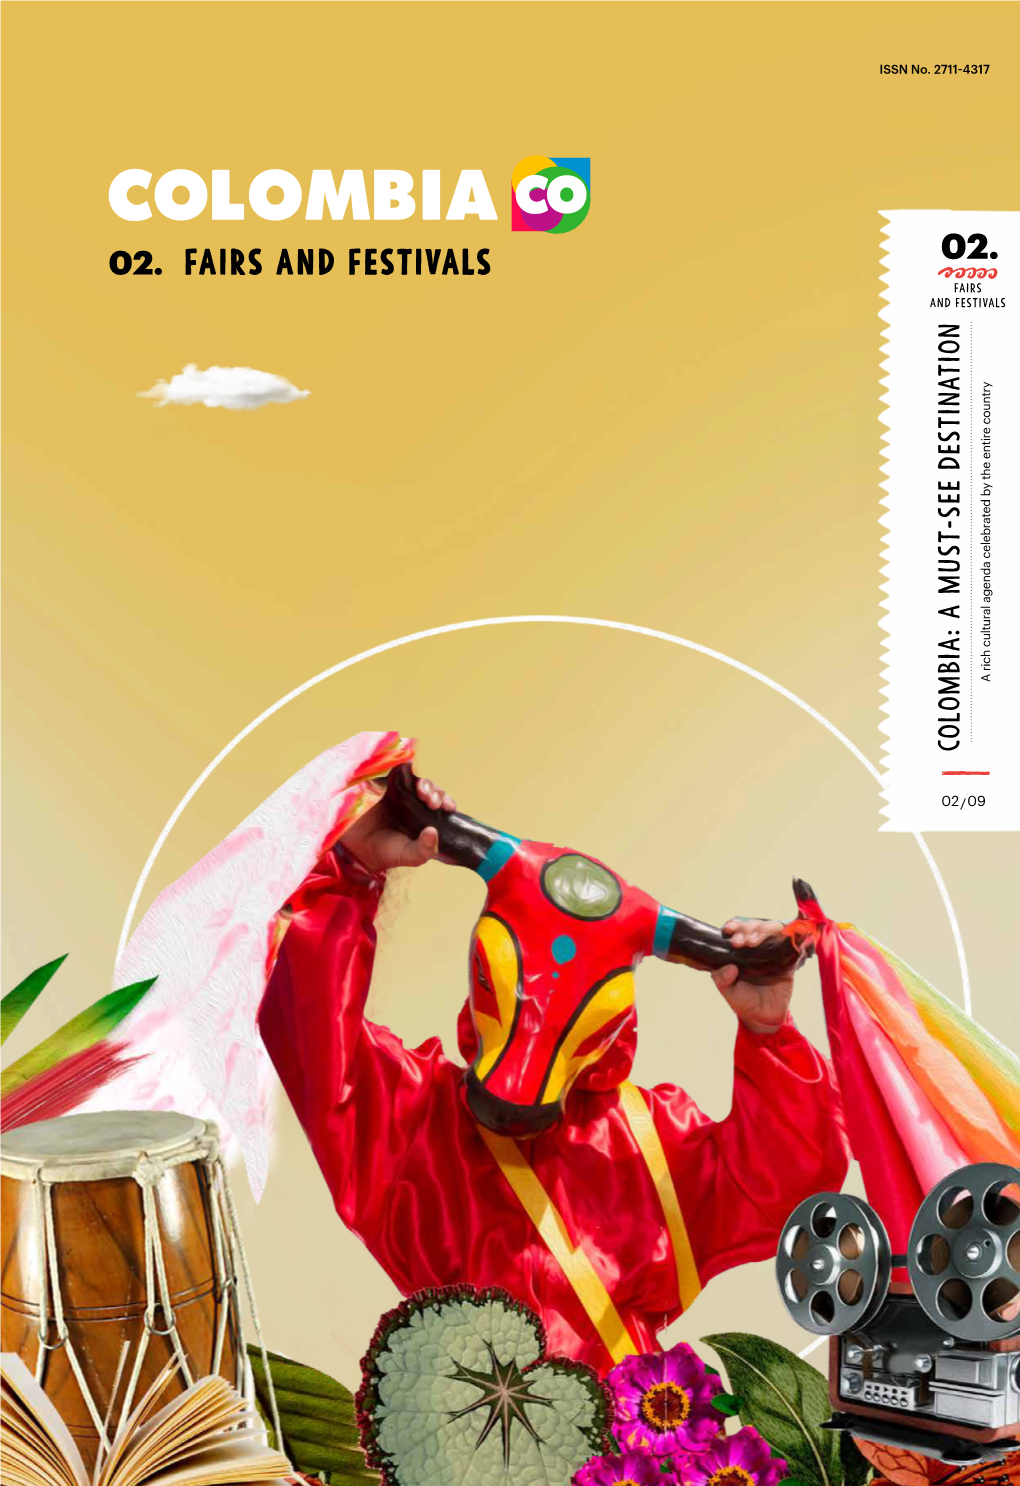 02. Fairs and Festivals